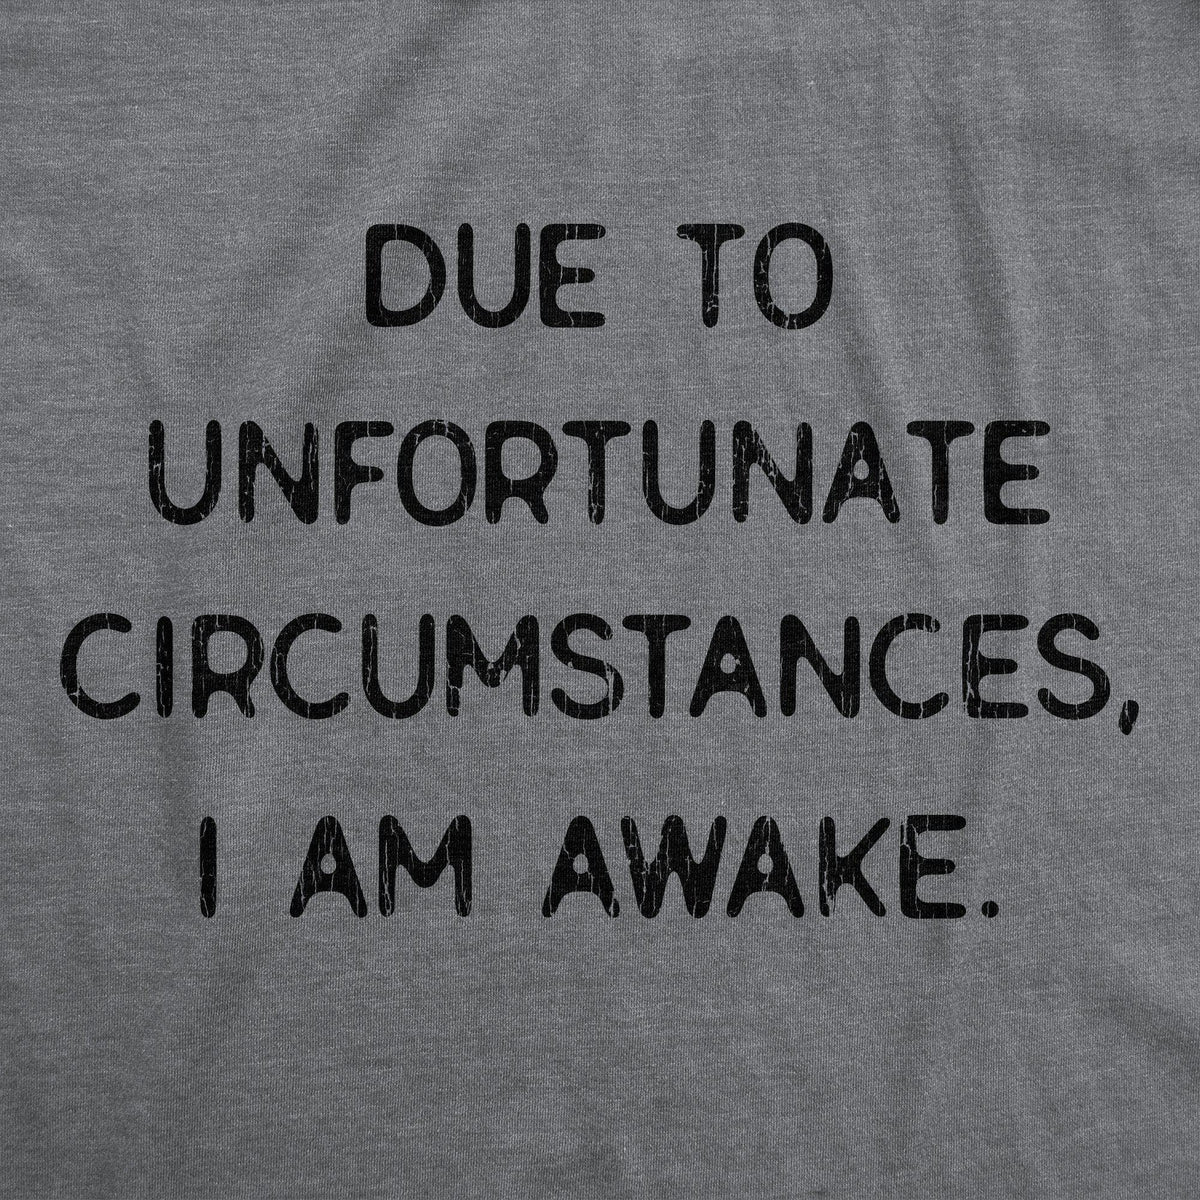 Due To Unfortunate Circumstances I Am Awake Women&#39;s Tshirt - Crazy Dog T-Shirts